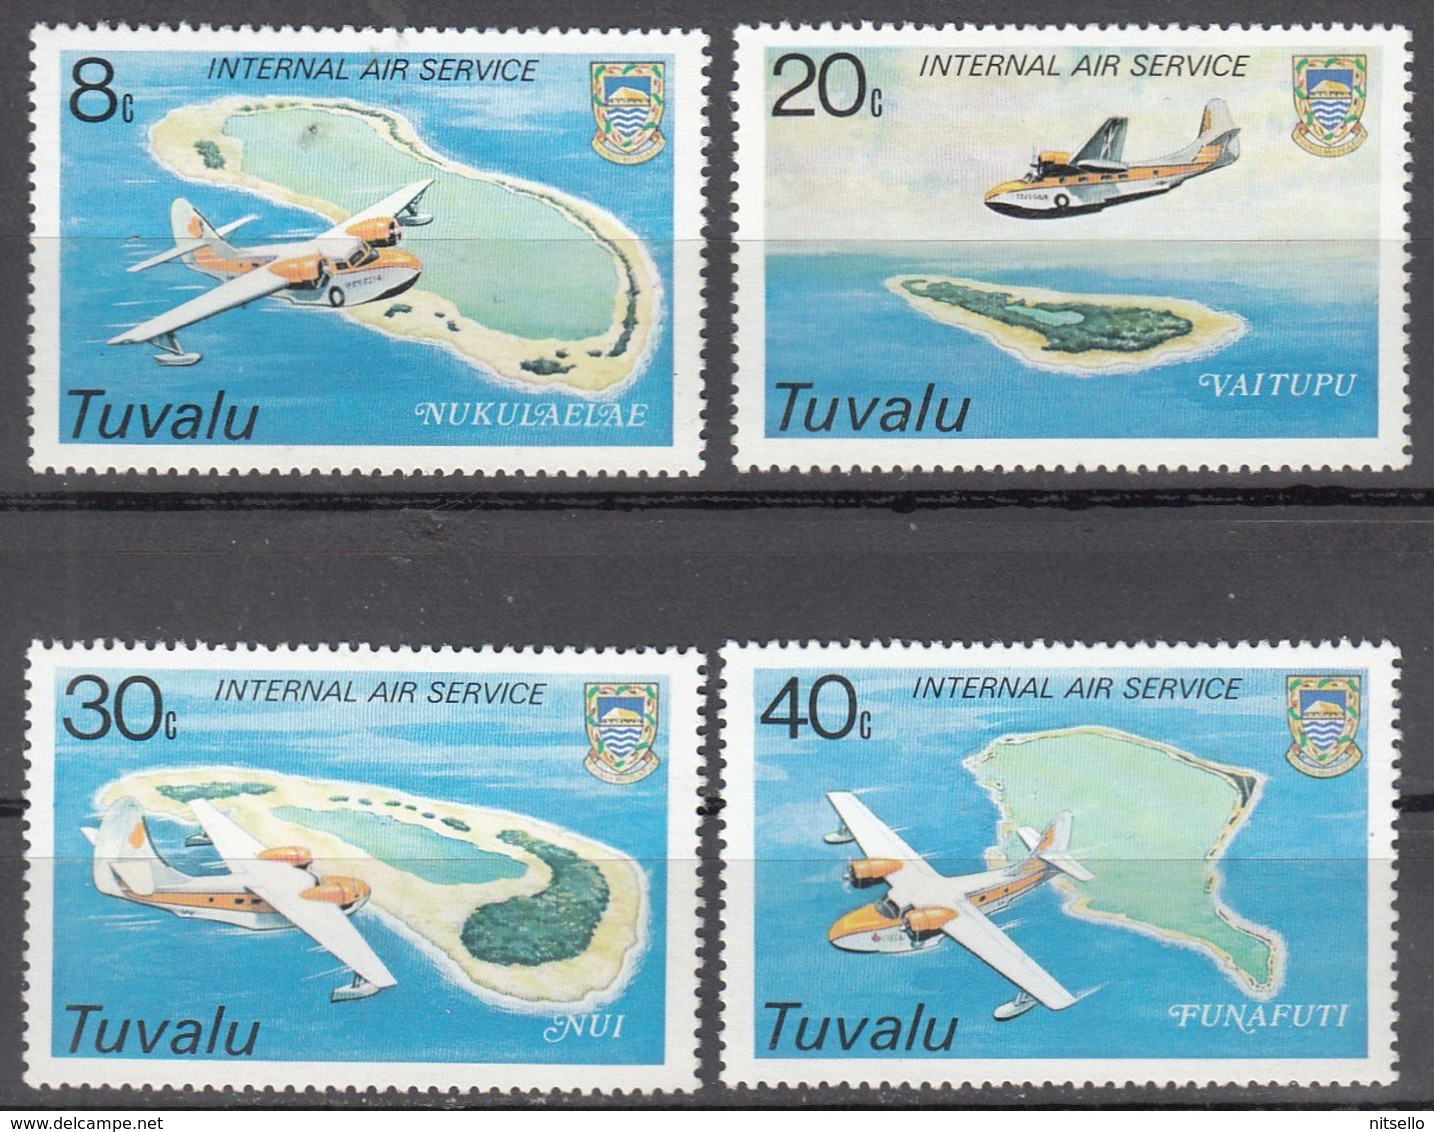 LOTE 1802  ///  (C067) TUVALU 1979  SCOTT Nº: 118-21 MNH   ¡¡¡ LIQUIDATION - OFERTA !!!! - Tuvalu